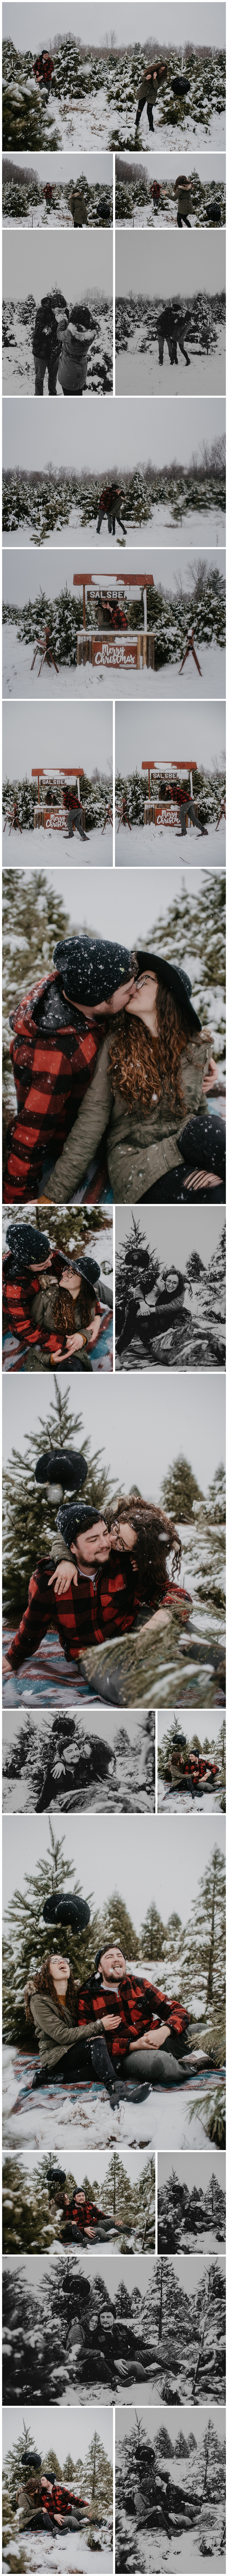 INTERY SNOW COUPLES SESSION | PHIL + KAYLA | TOLEDO, OHIO | WEDDING + ELOPEMENT PHOTOGRAPHER